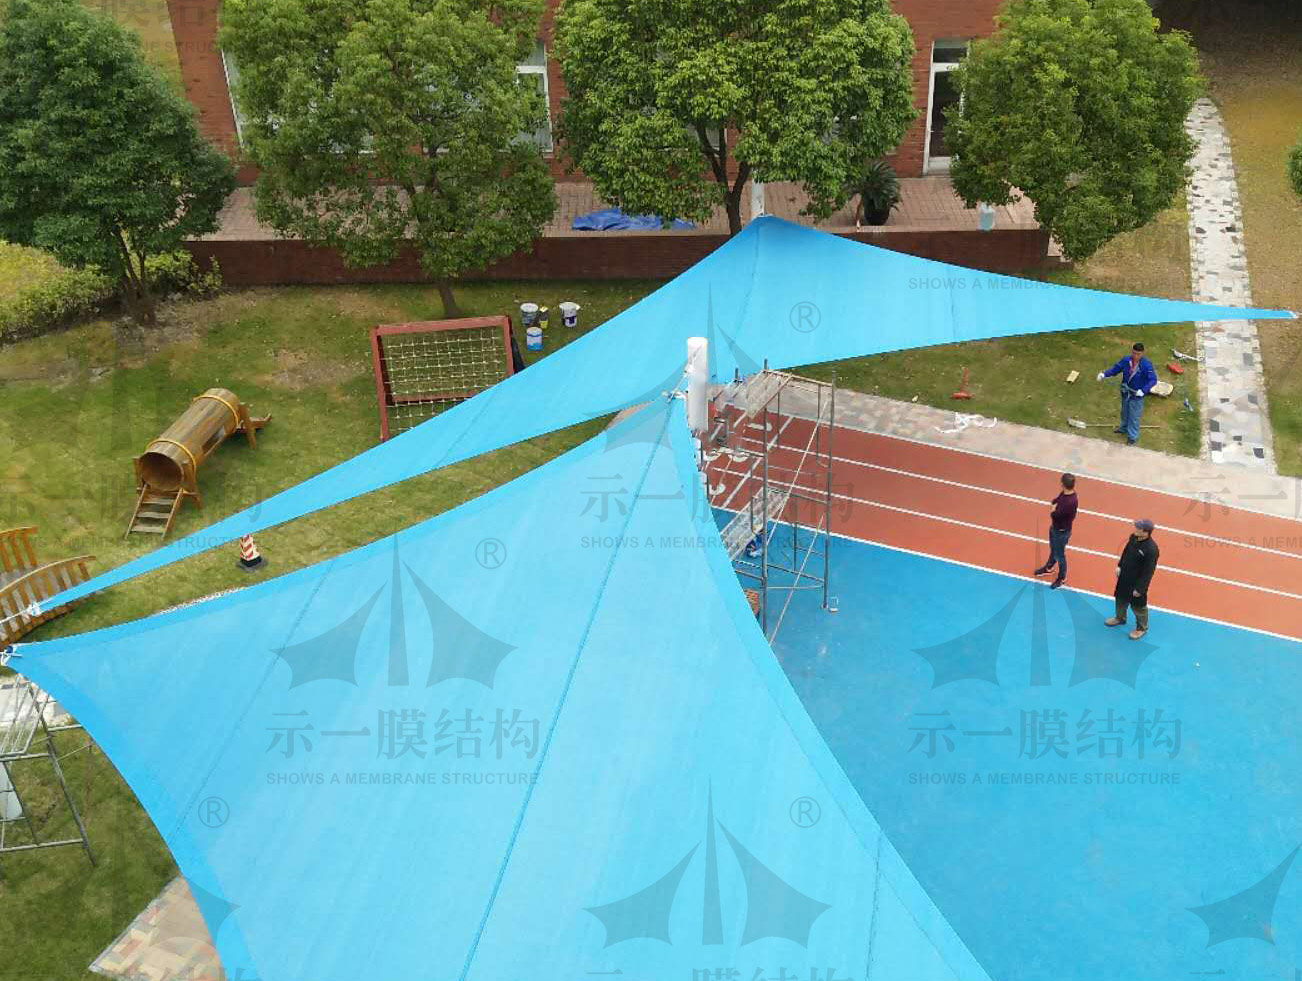 Shanghai SHOWS A membrane structure blue membrane structure shade sail